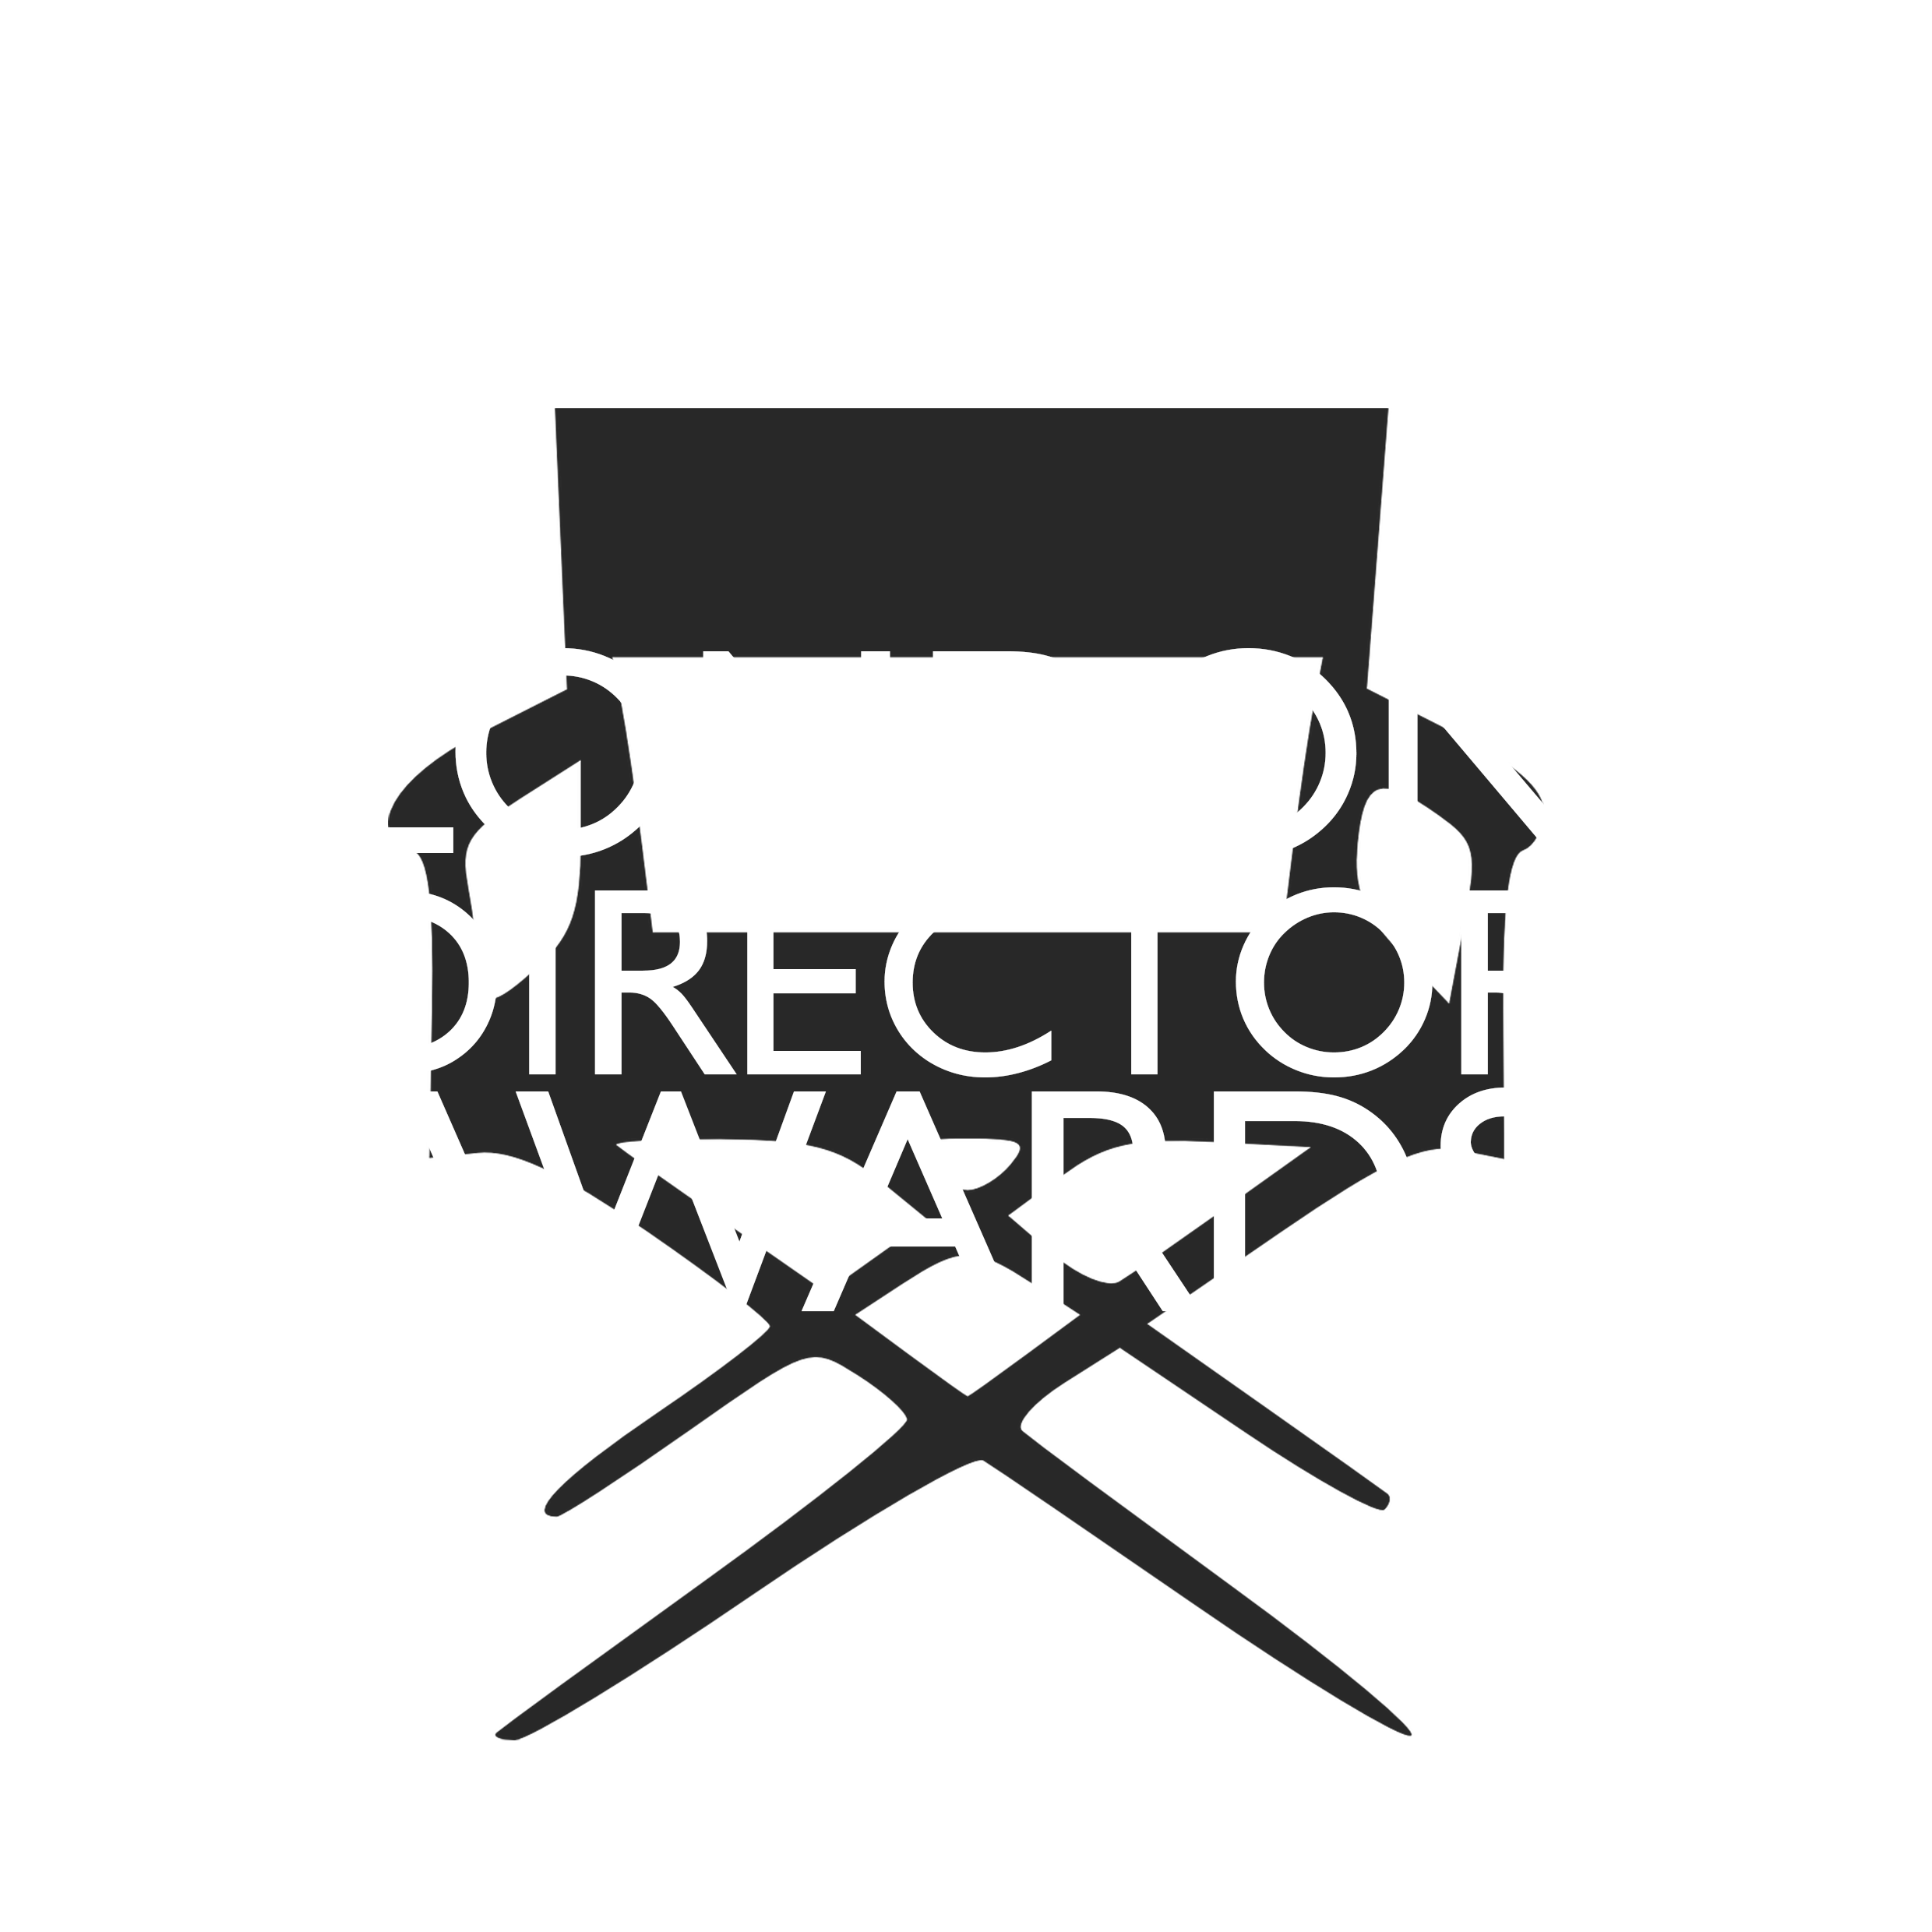 London Director Awards